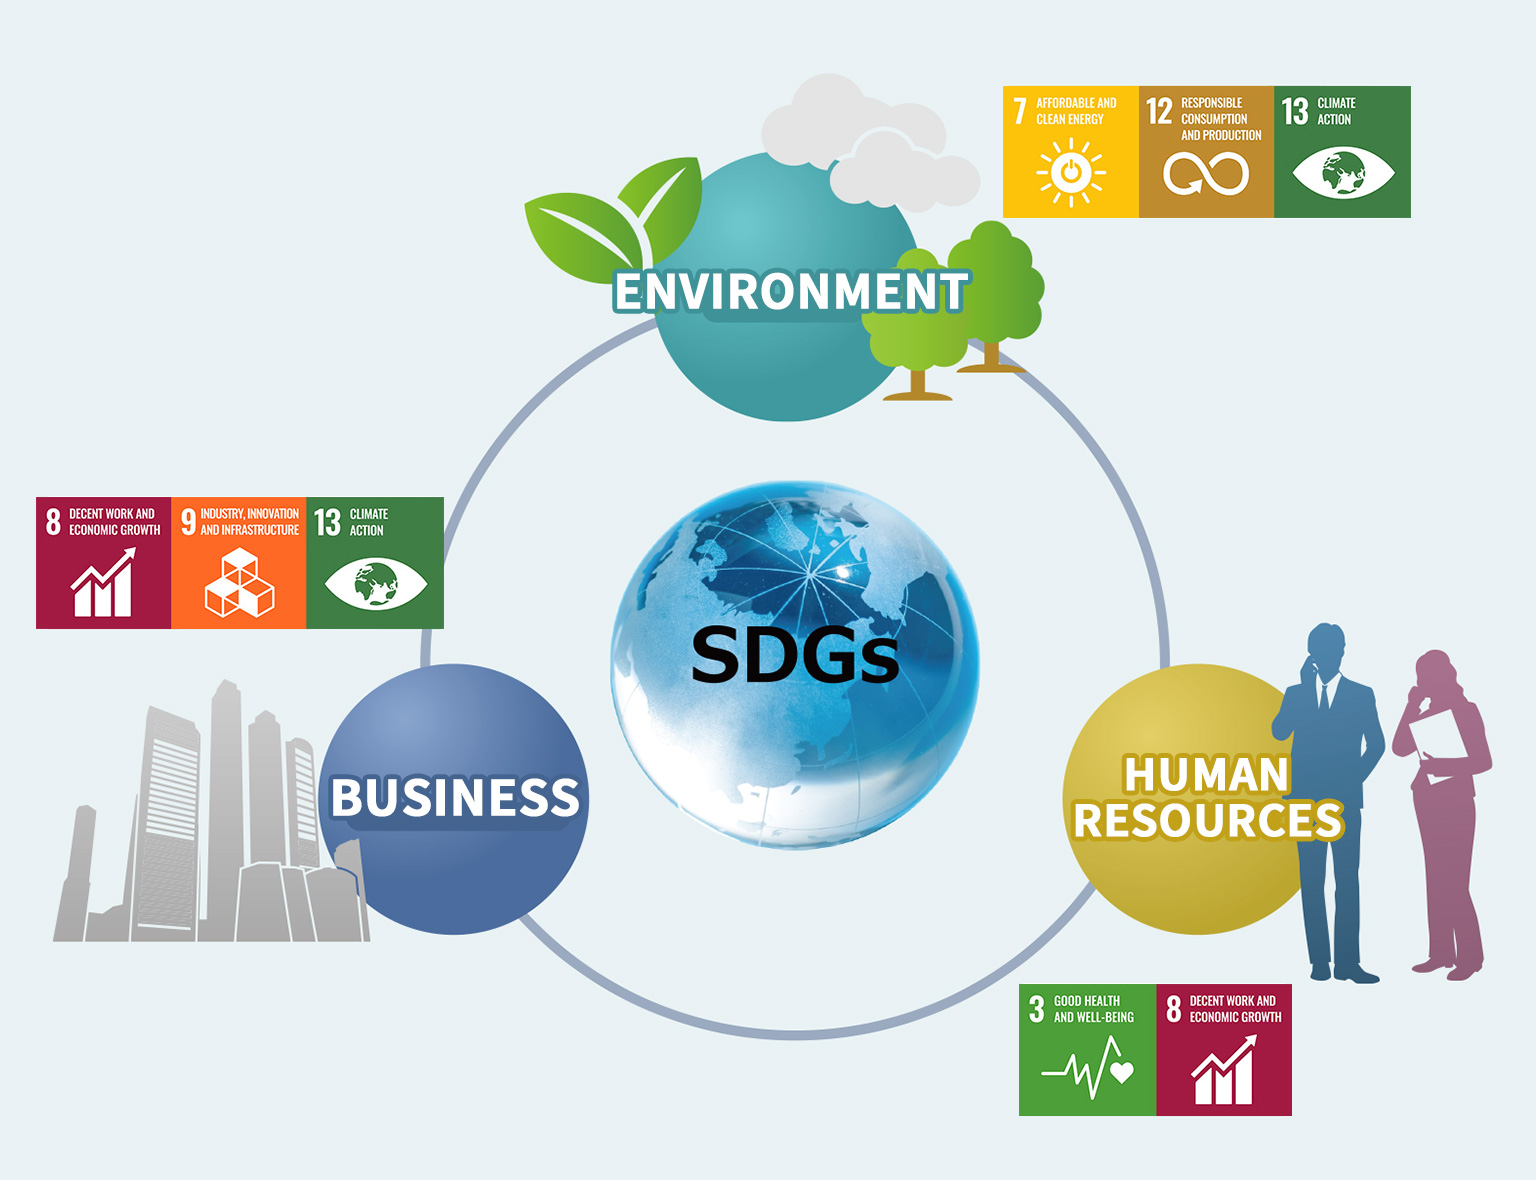 Efforts to achieve SDGs